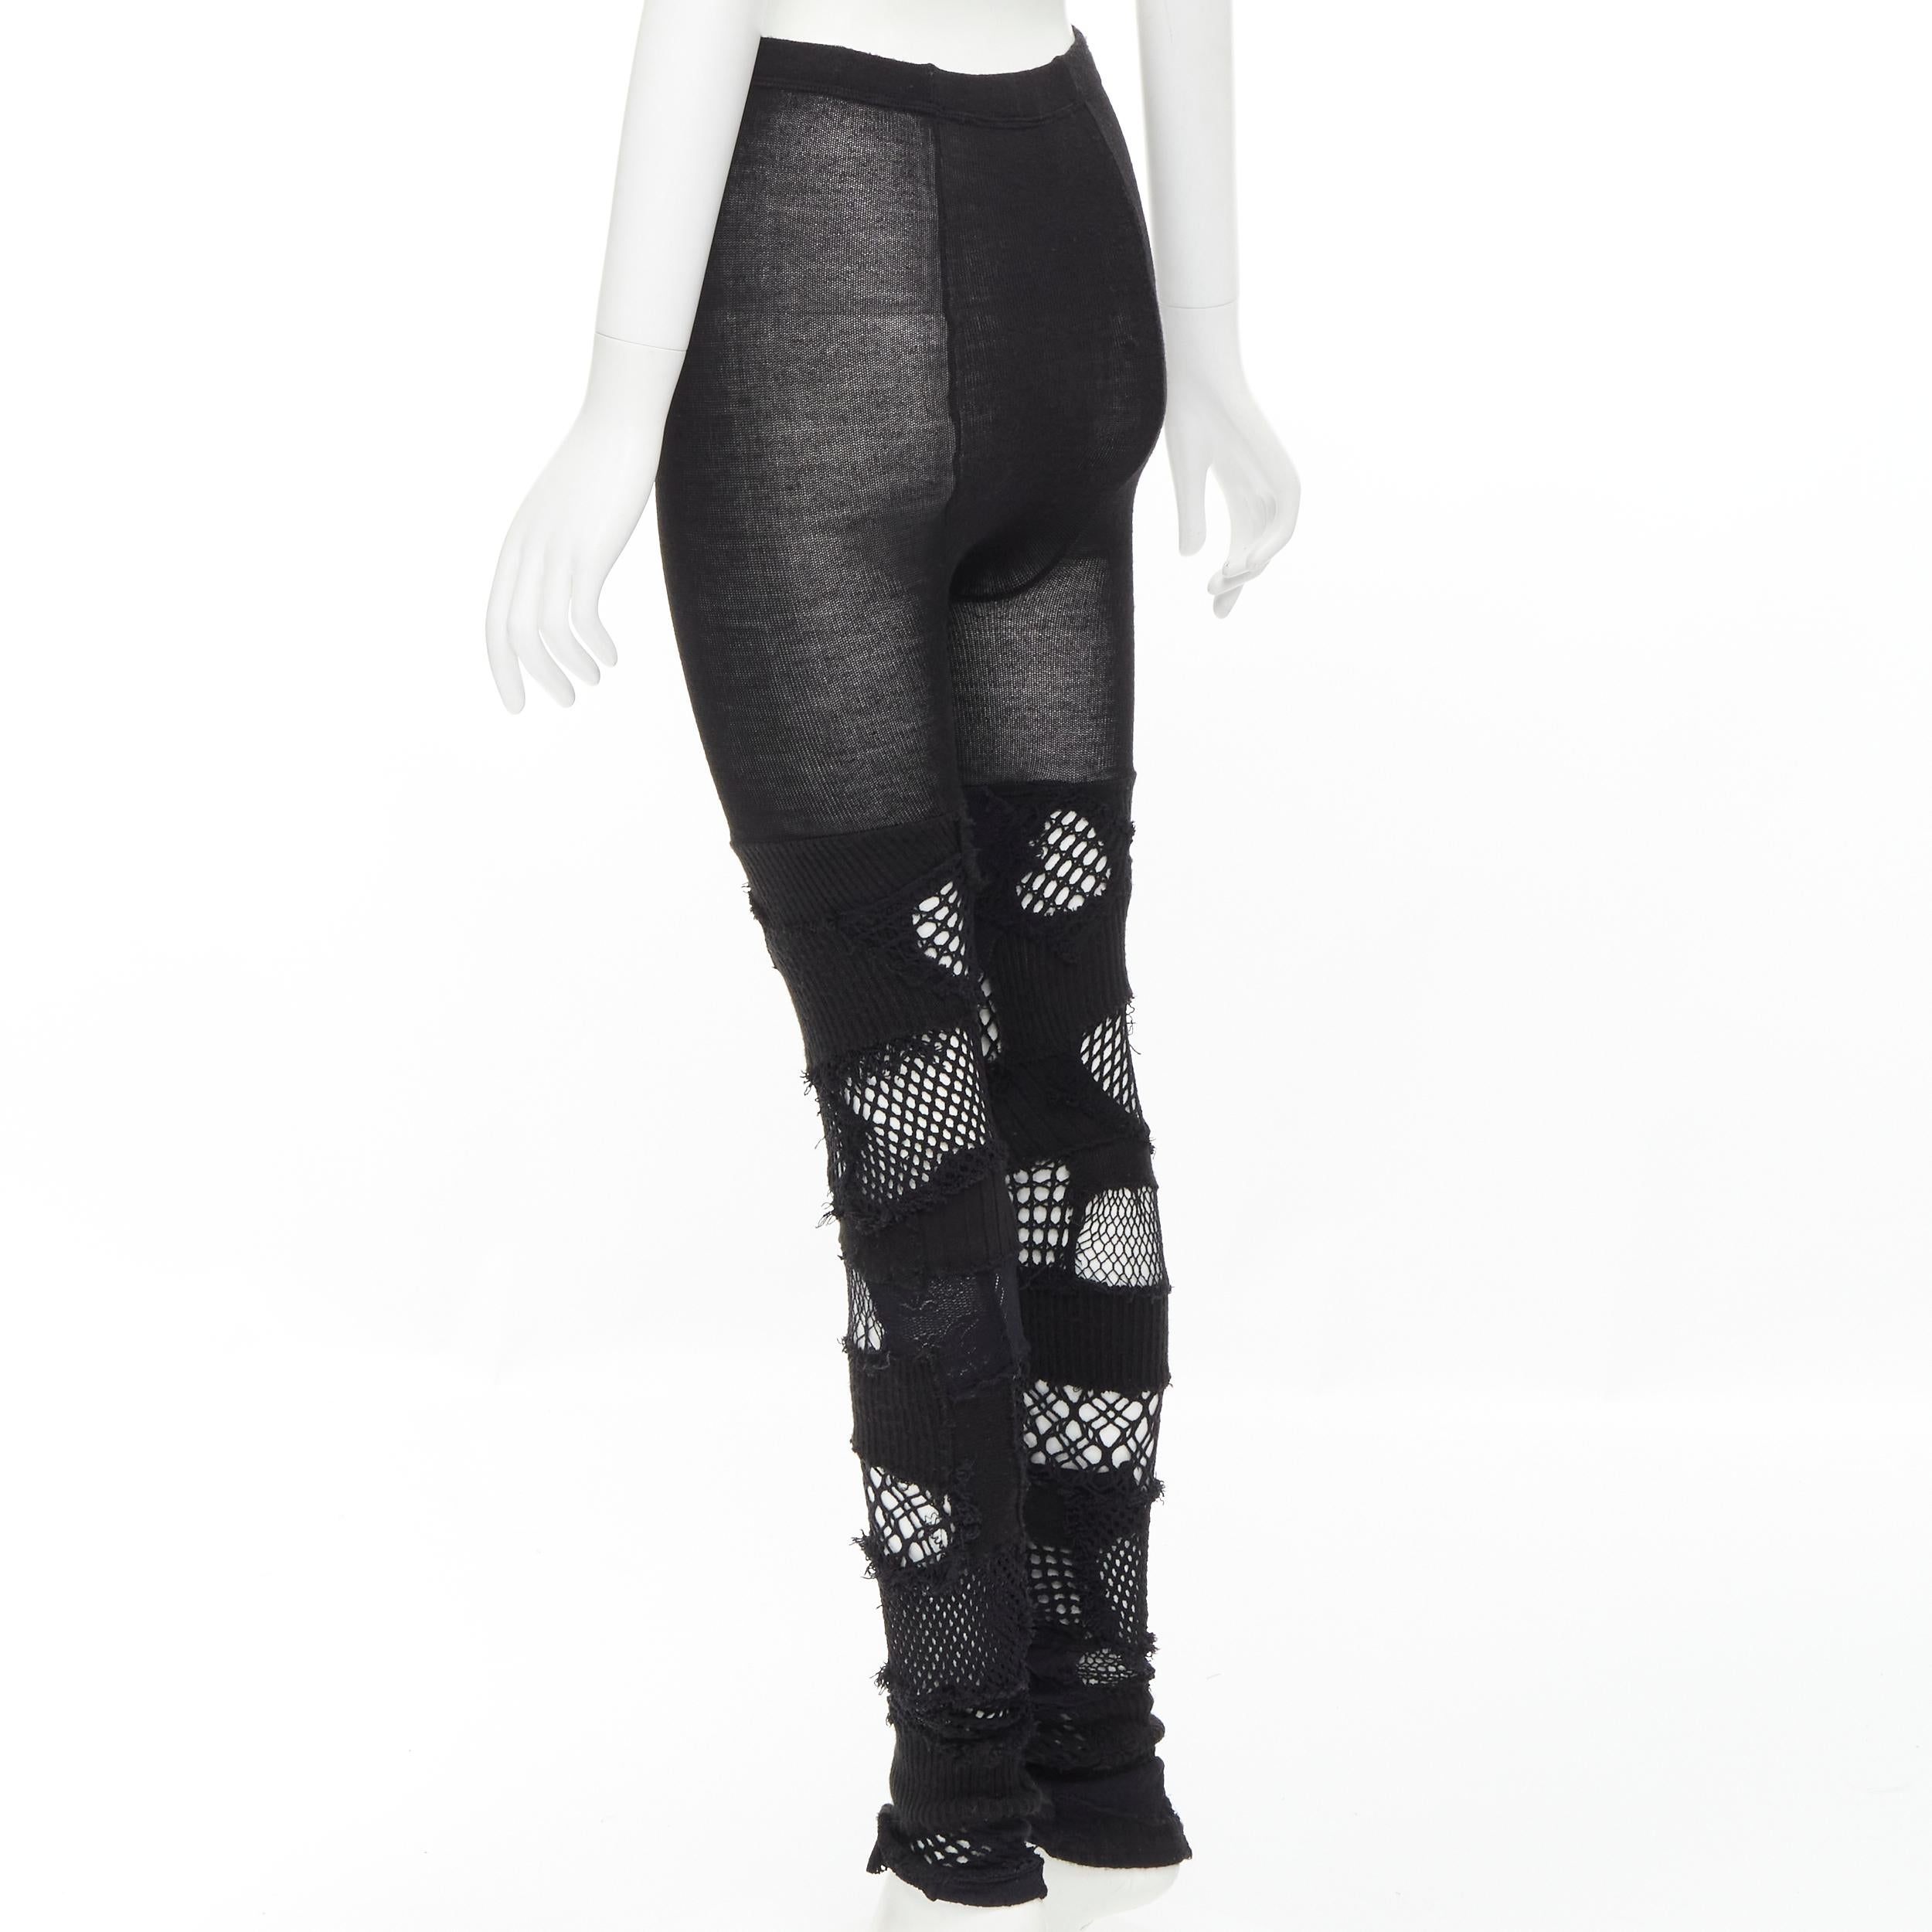 Women's runway JUNYA WATANABE black fishnet deconstructed tights leggings pants S